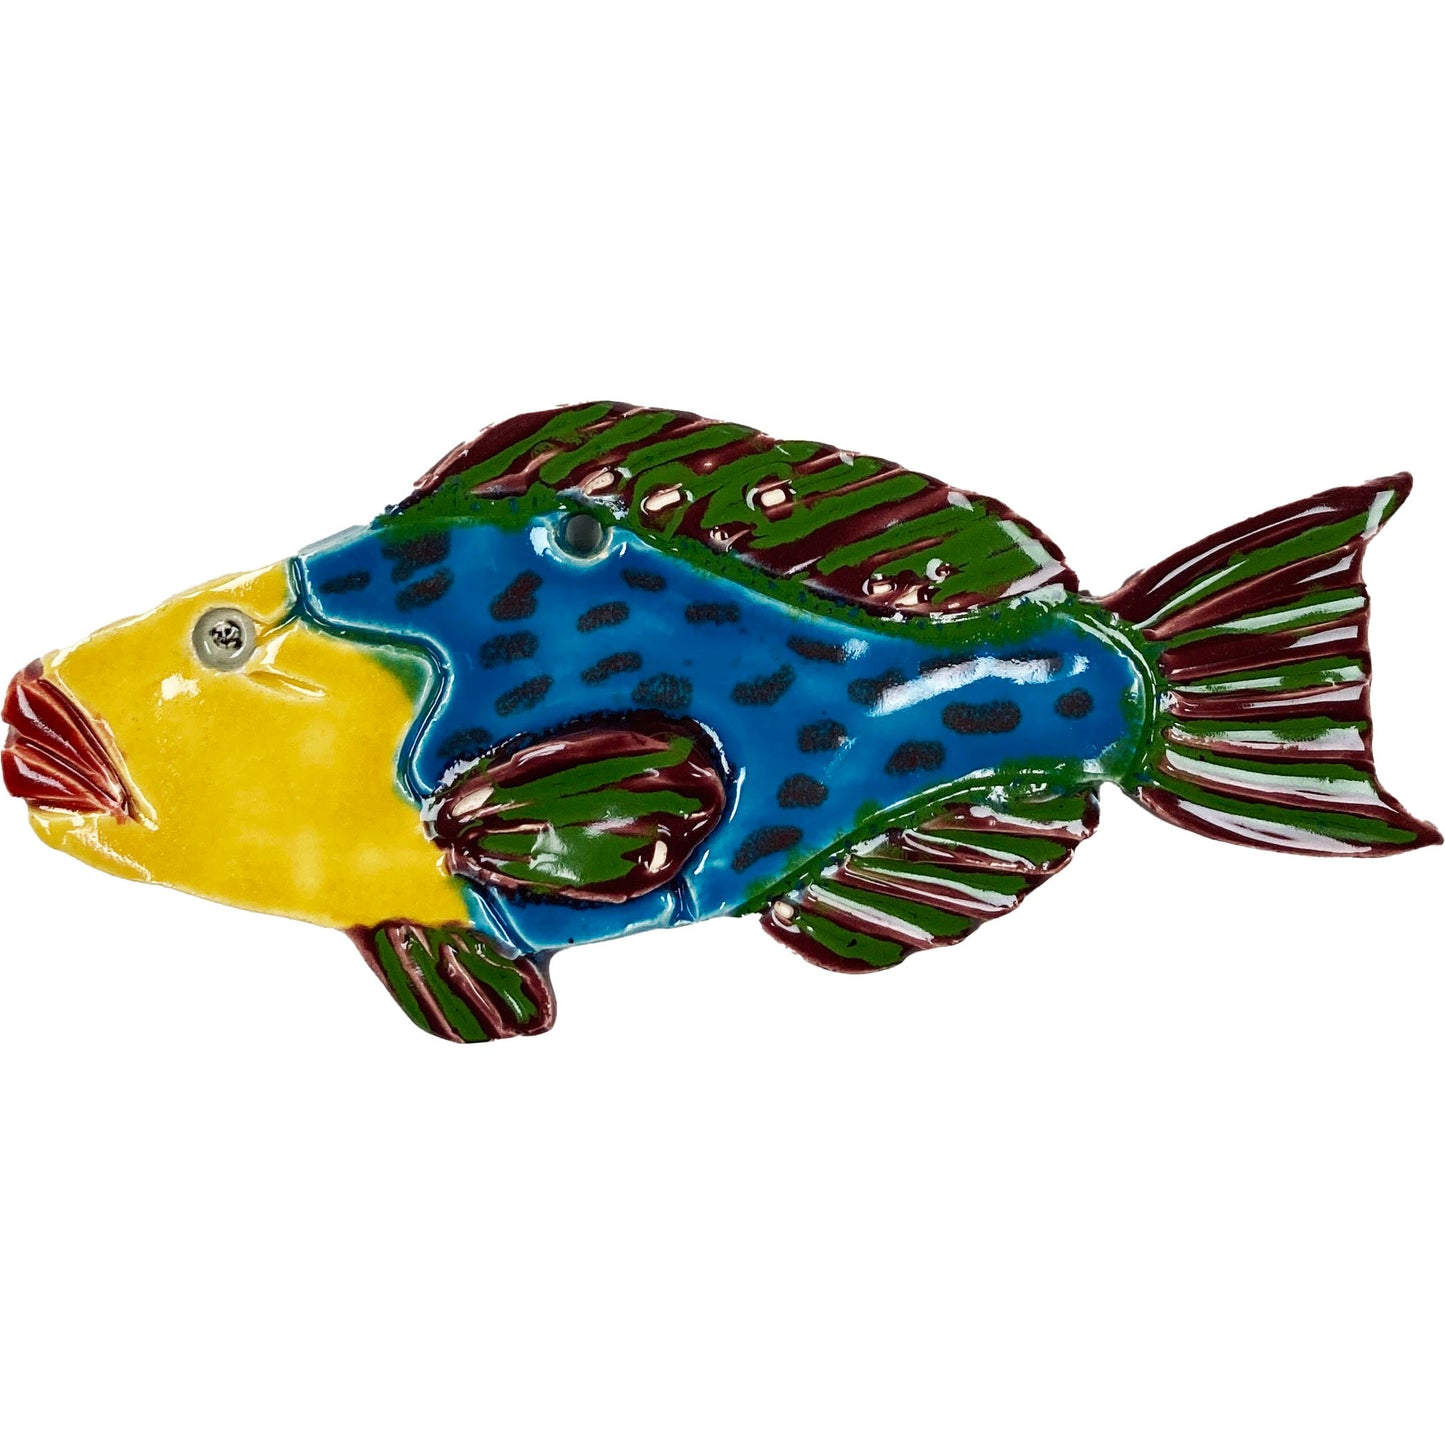 WATCH Resources Art Guild - Ceramic Arts Handmade Clay Crafts Fresh Fish 7.5-inch x 3.5-inch Glazed Fish by Jim Wilbanks